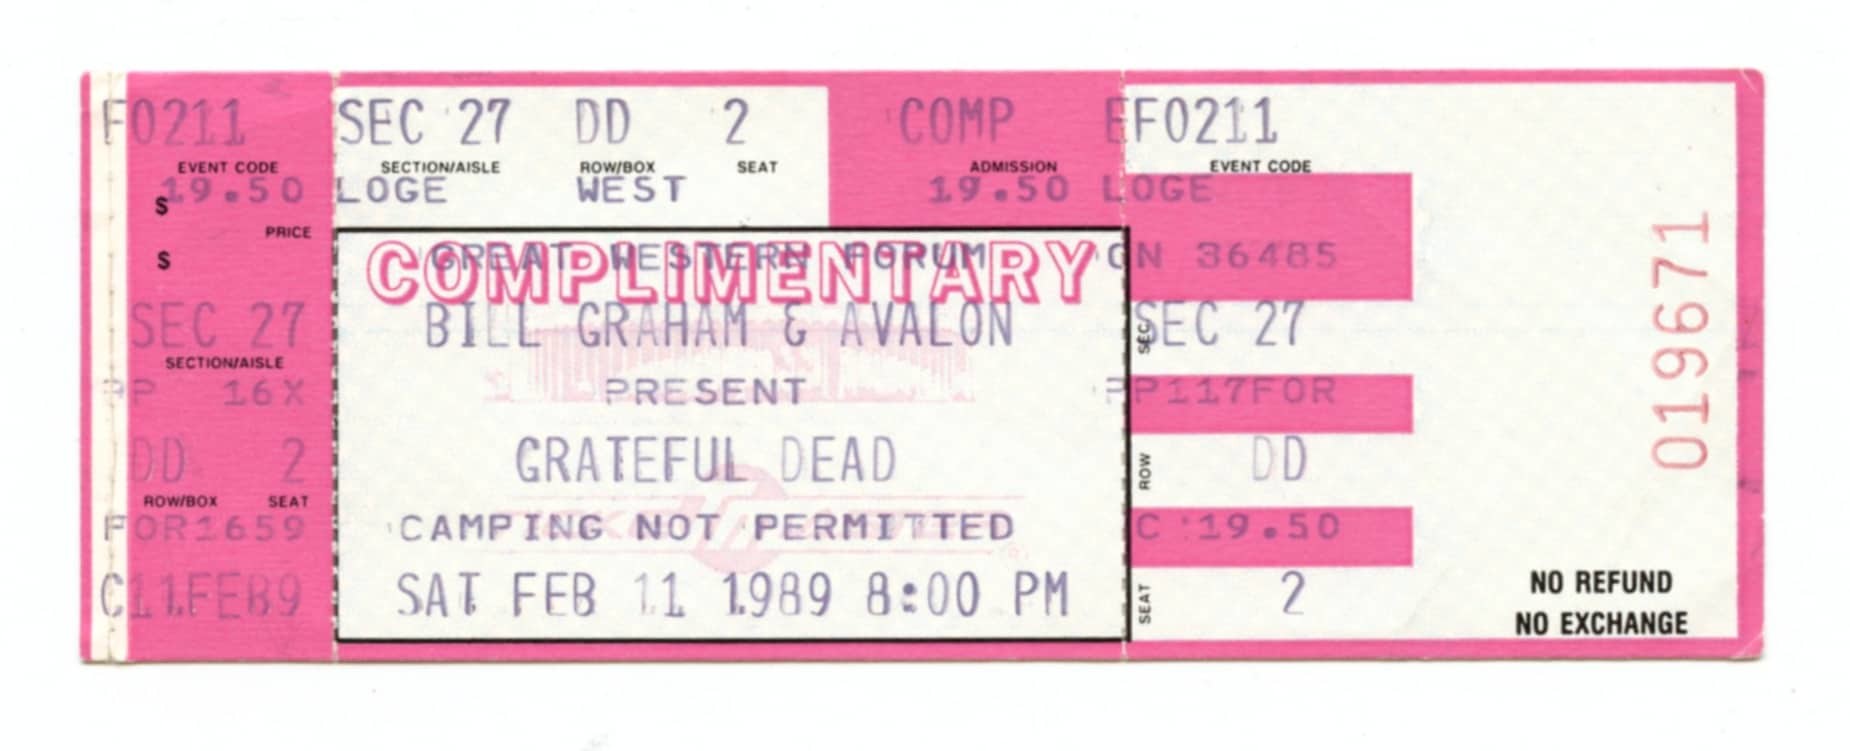 Grateful Dead Vintage Ticket 1989 Feb 11 Great Western Forum Complimentary